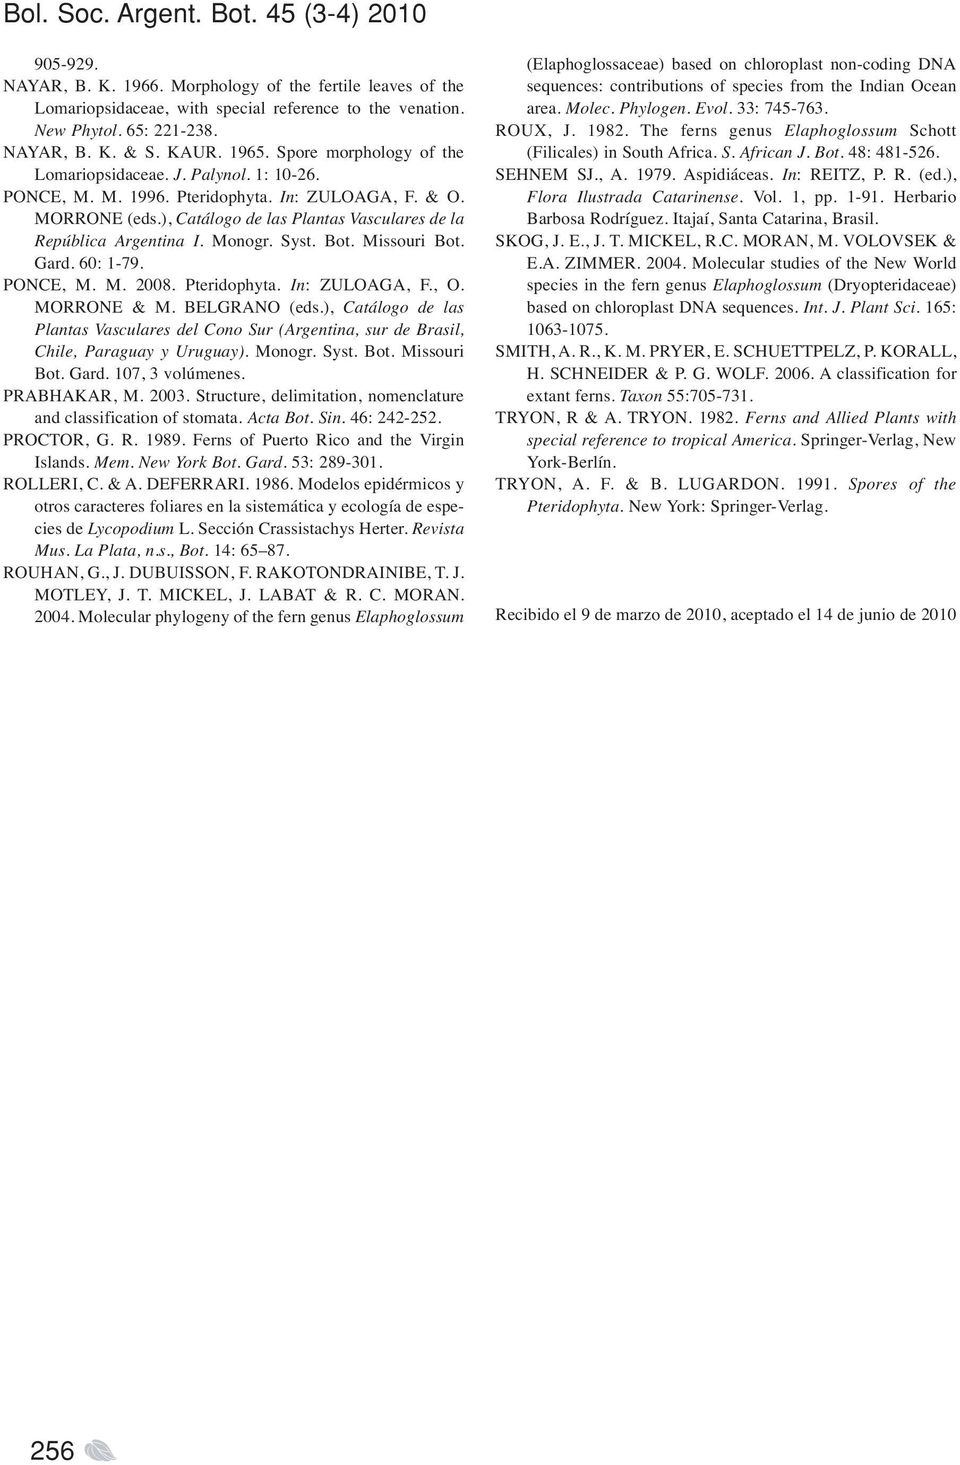 ), Catálogo de las Plantas Vasculares de la República Argentina I. Monogr. Syst. Bot. Missouri Bot. Gard. 60: 1-79. PONCE, M. M. 2008. Pteridophyta. In: ZULOAGA, F., O. MORRONE & M. BELGRANO (eds.